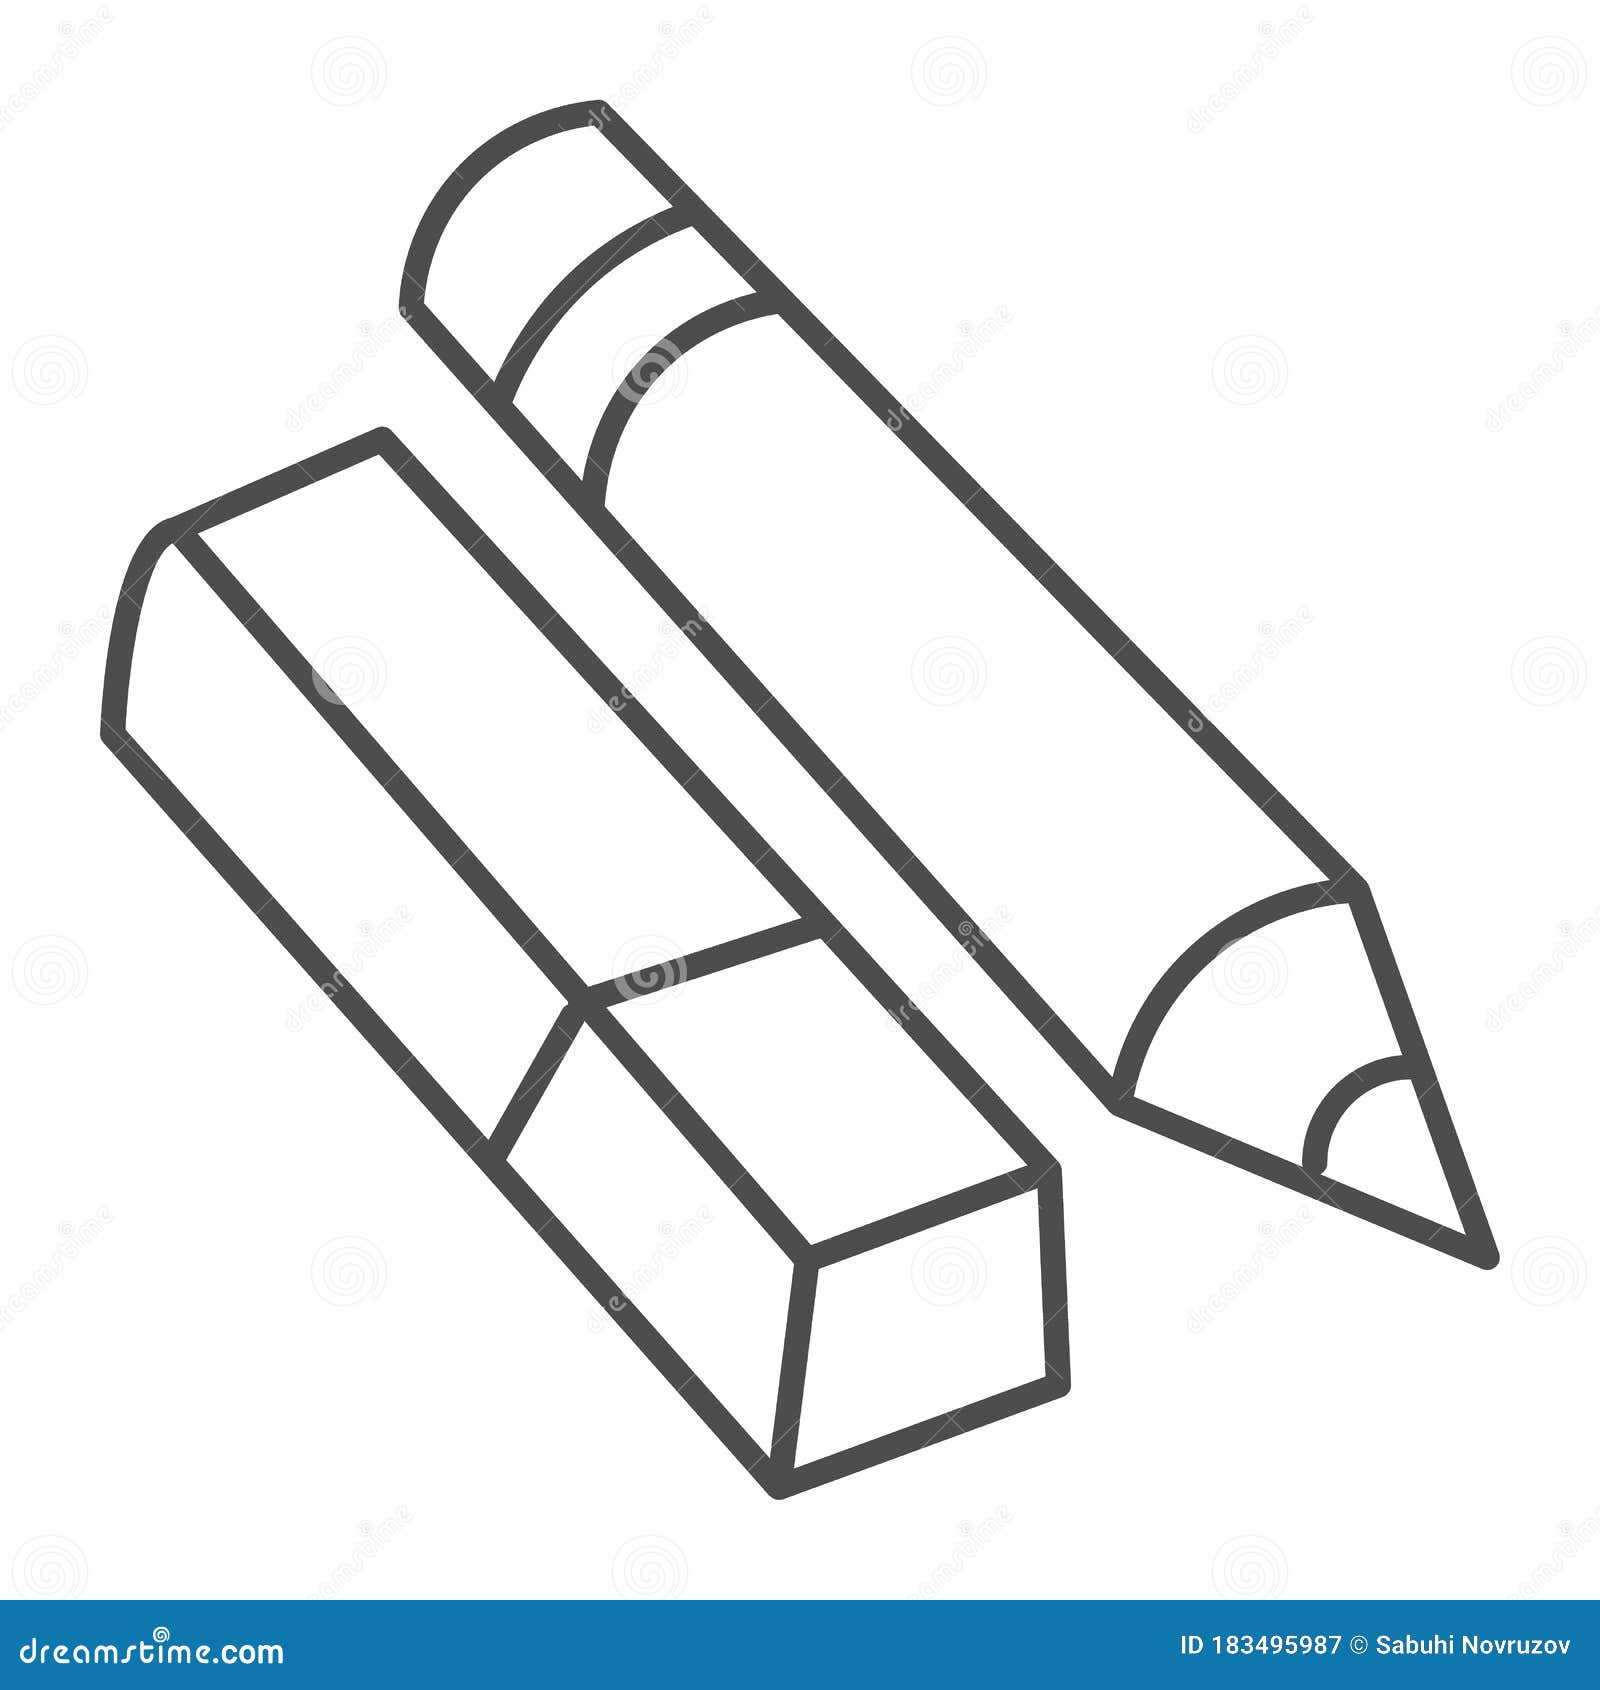 Eraser Doodle Illustration Vector, Rat Drawing, Eraser, School PNG and  Vector with Transparent Background for Free Download